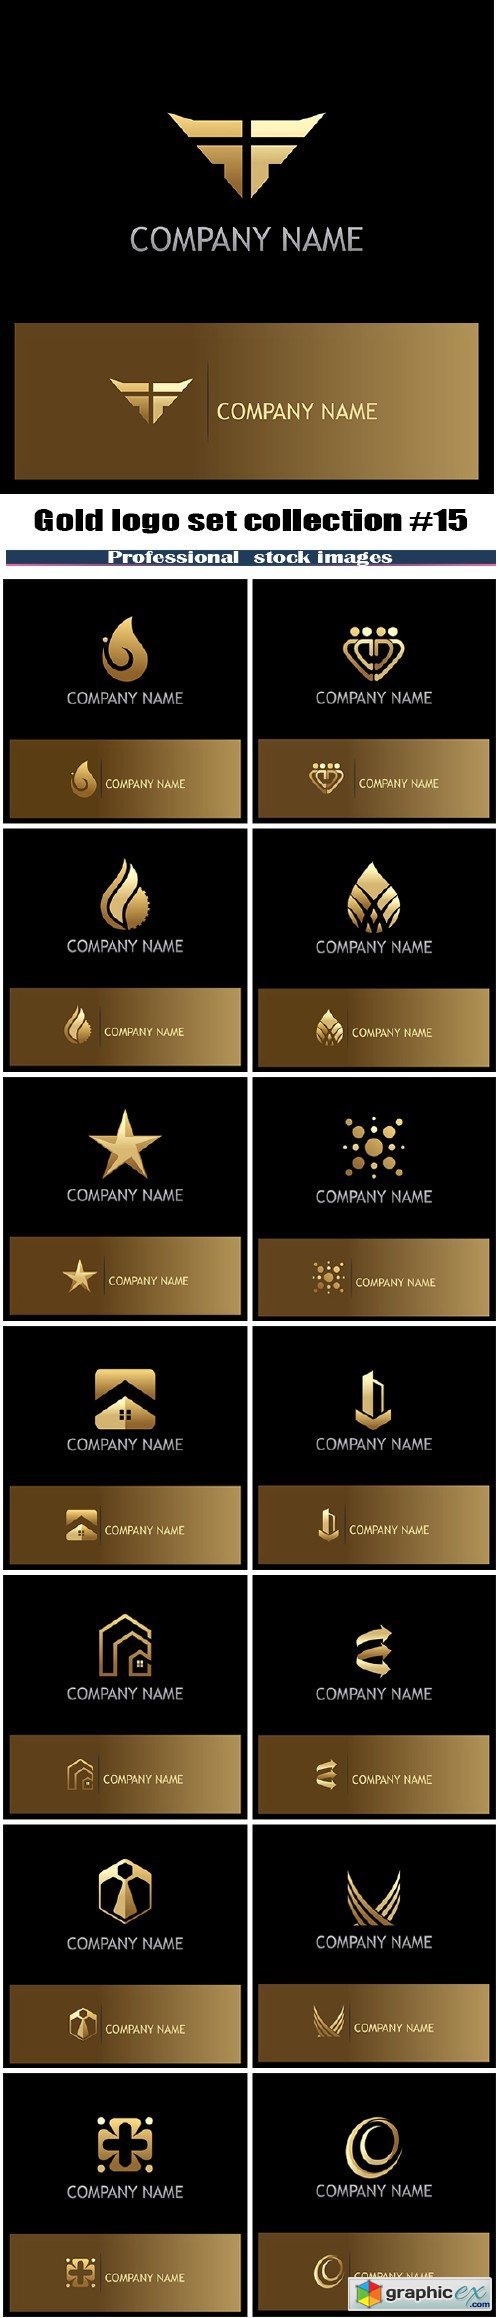 Gold logo set collection #15